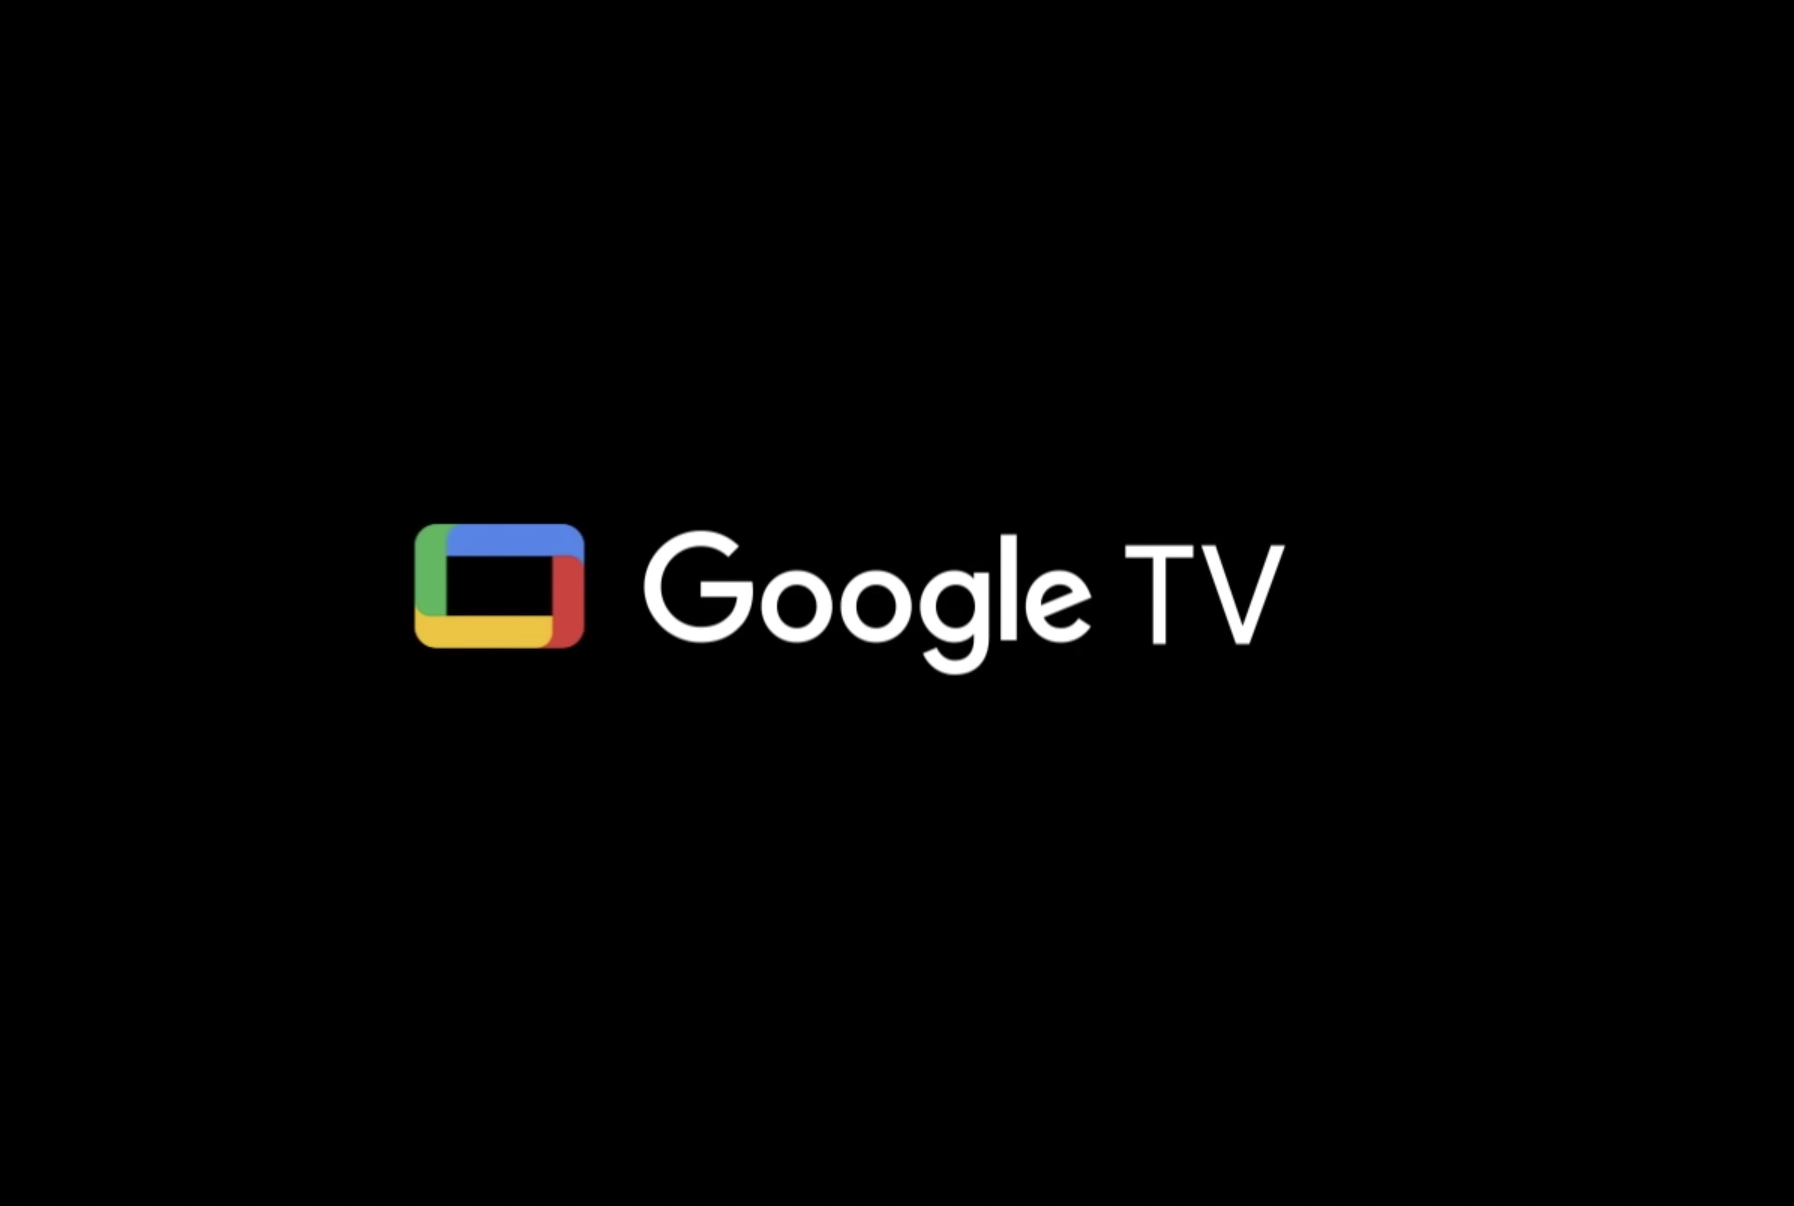 Google TV tiene una ligera mancha de pintura